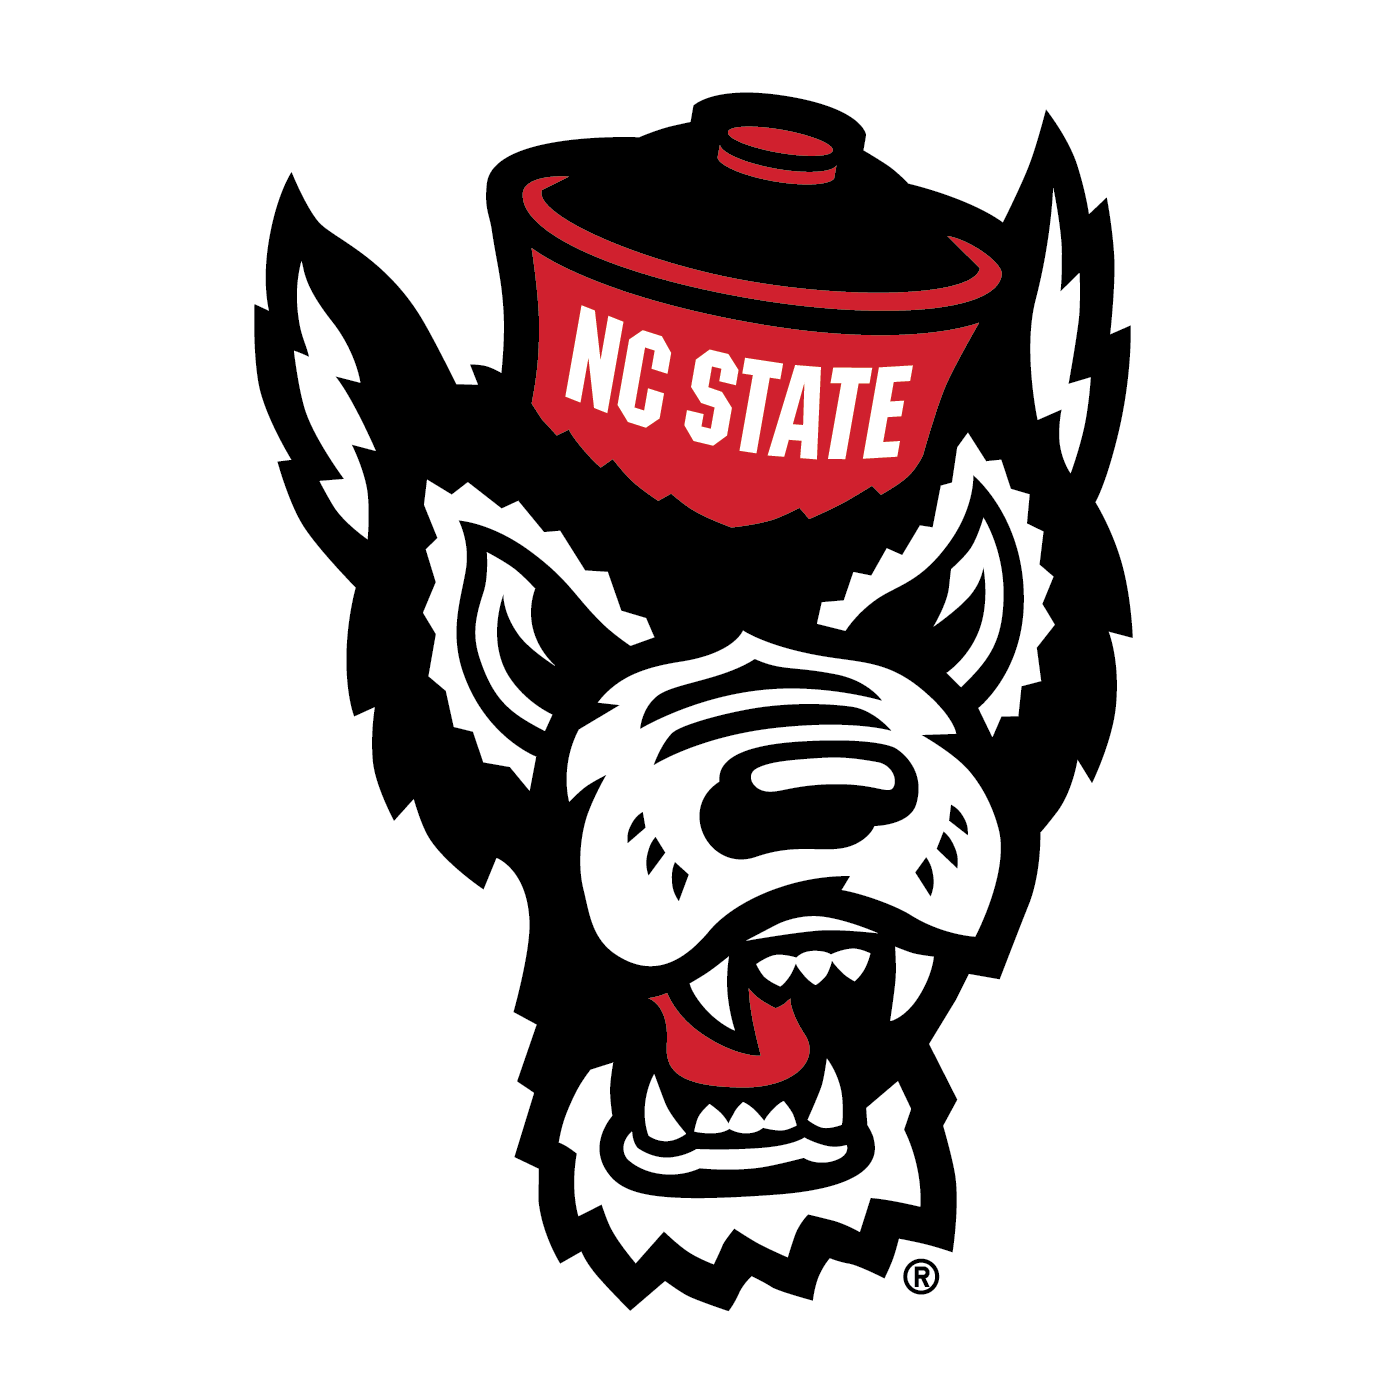 North Carolina State (NC State) Wolfpack logo